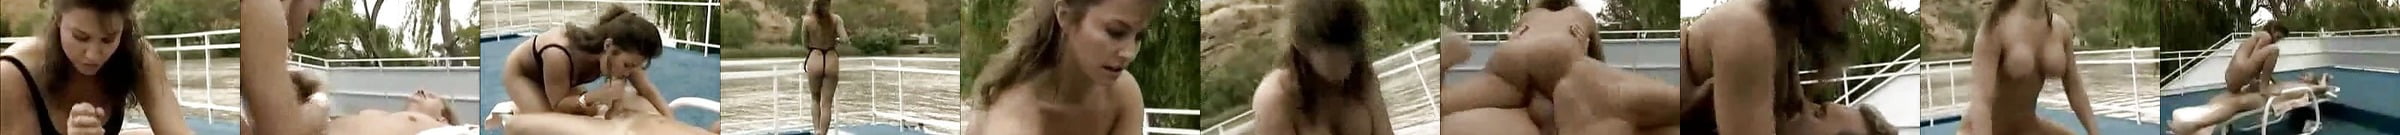 Eva Longoria Free Celebrity Porn Video 8c Xhamster